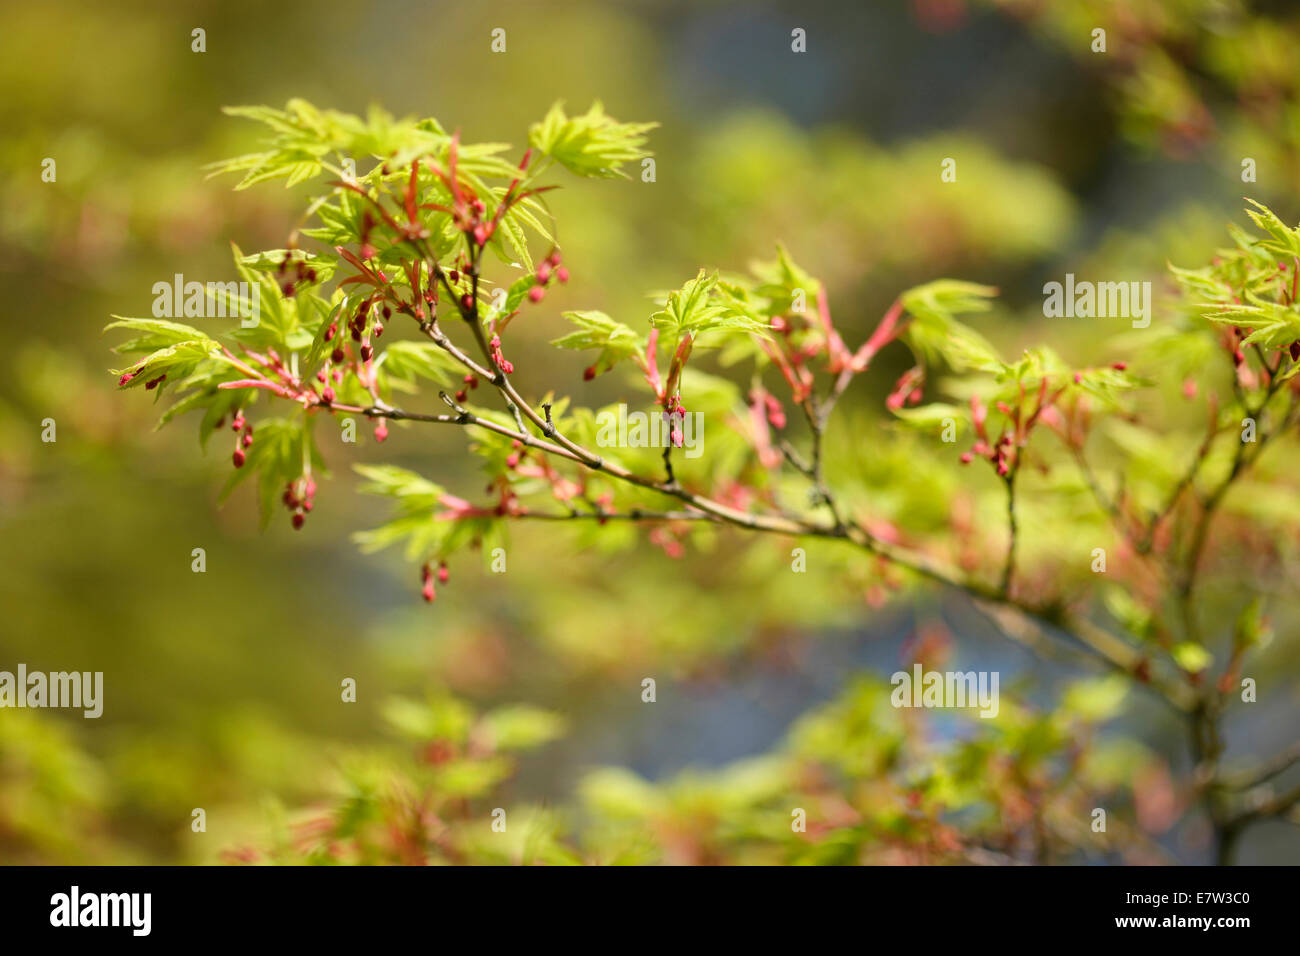 Acer Palmatum im Frühling, Knospen, Vitalität und Energie © Jane Ann Butler Fotografie JABP1297 Stockfoto